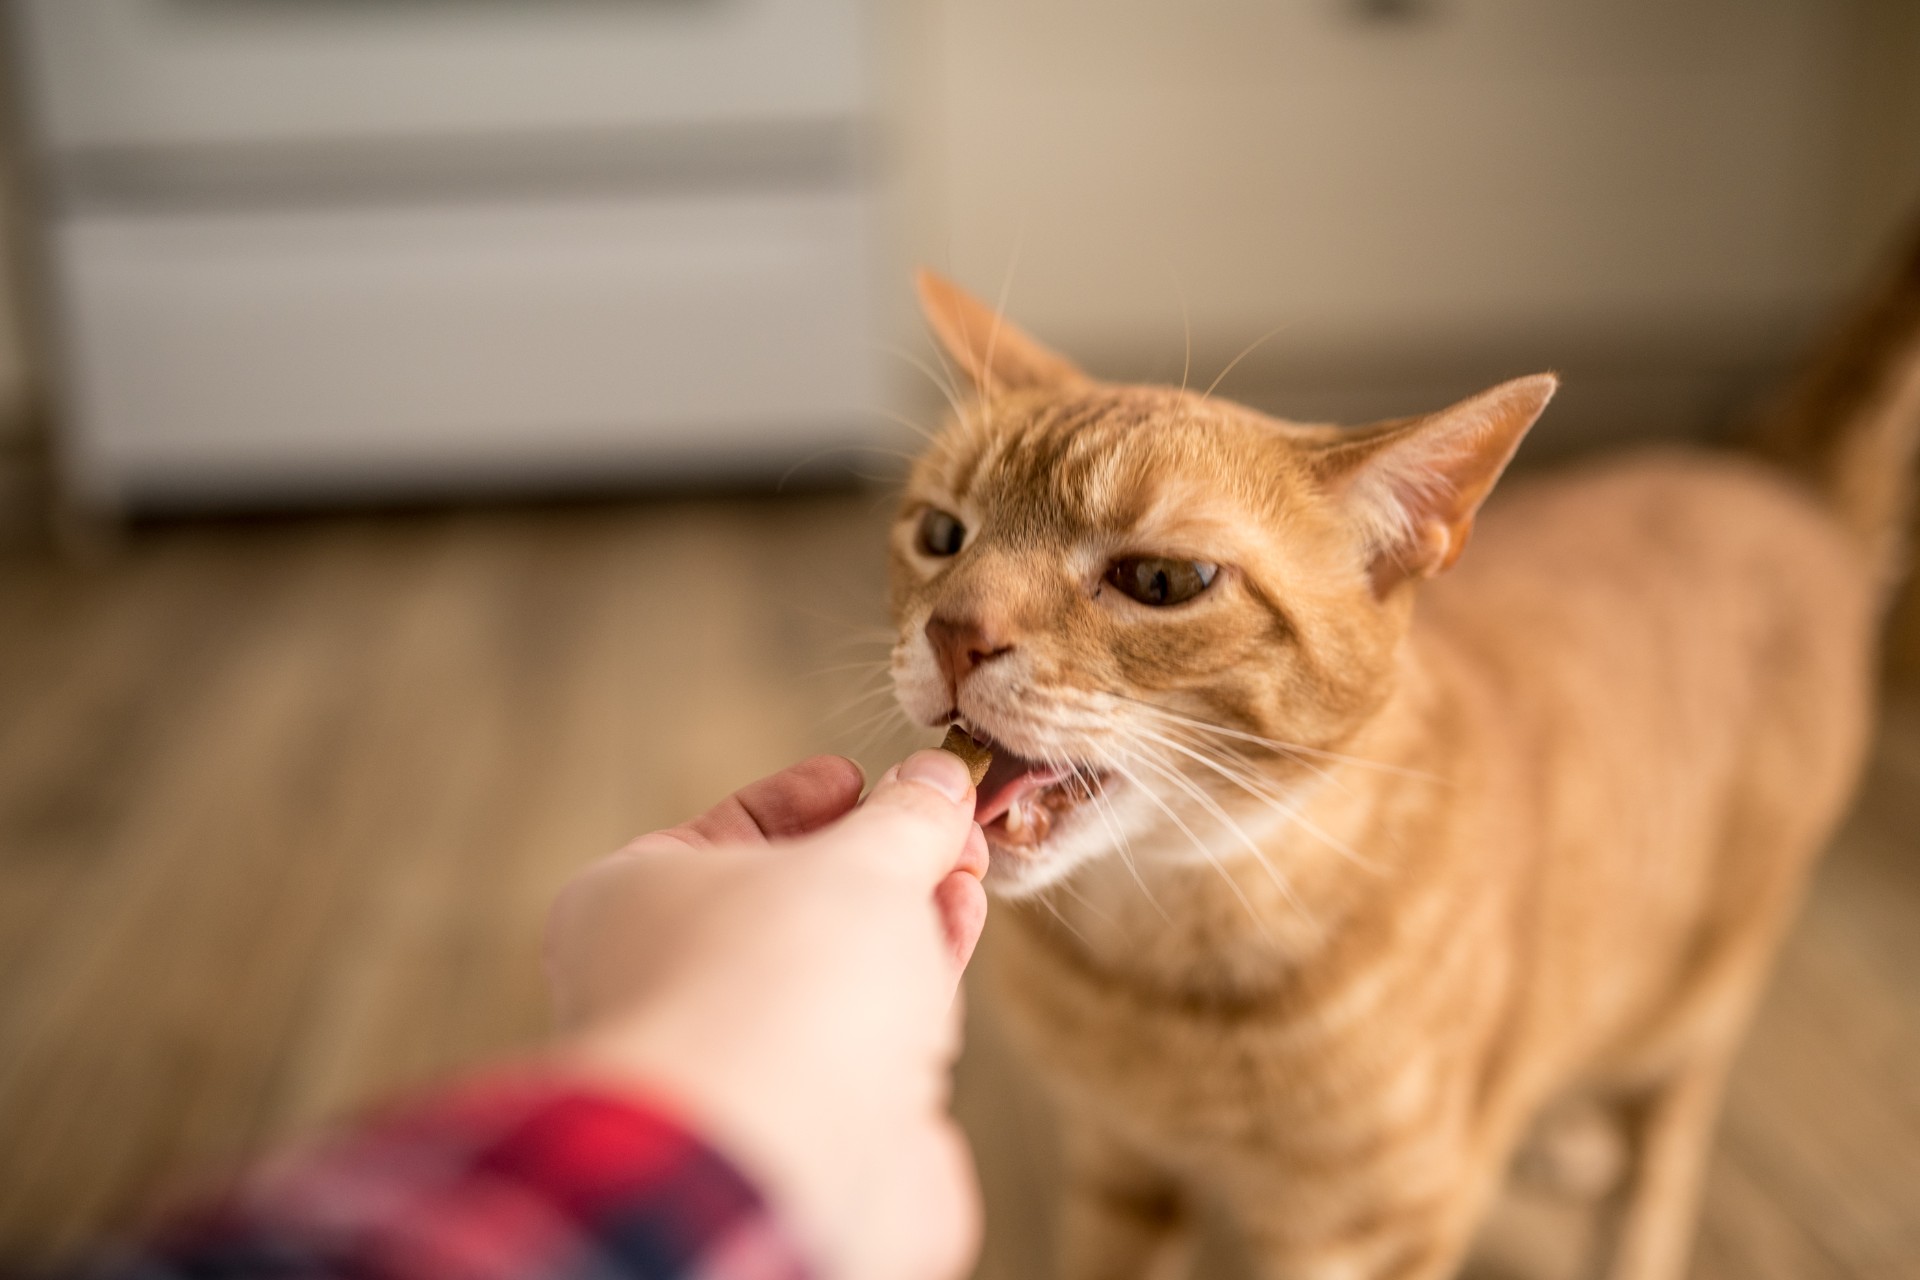 A tabby cat eating a treat.